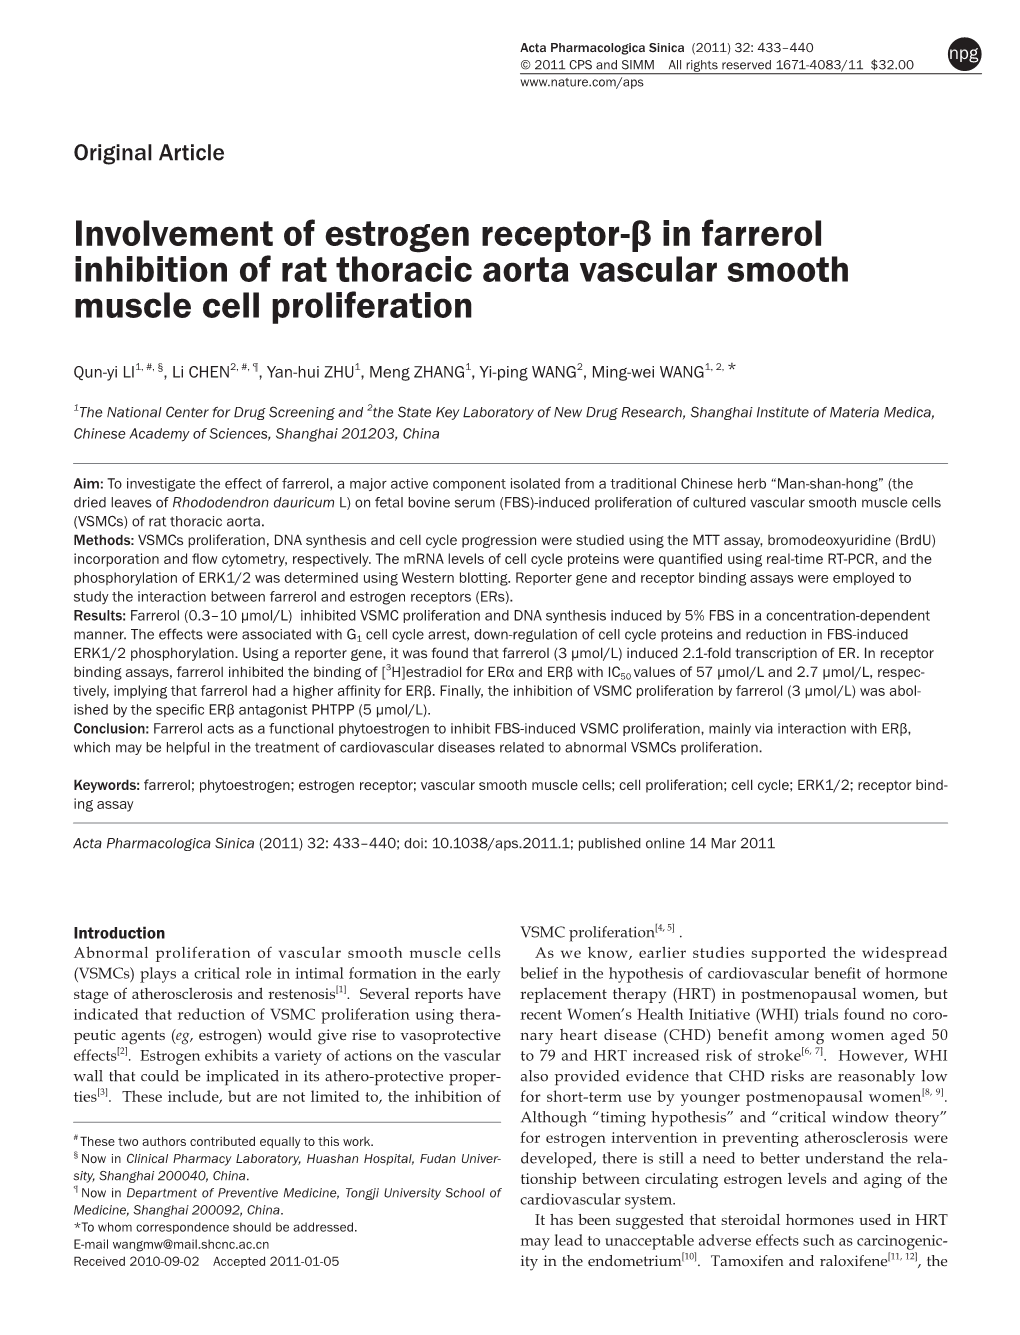 Involvement of Estrogen Receptor-Β in Farrerol Inhibition of Rat Thoracic Aorta Vascular Smooth Muscle Cell Proliferation